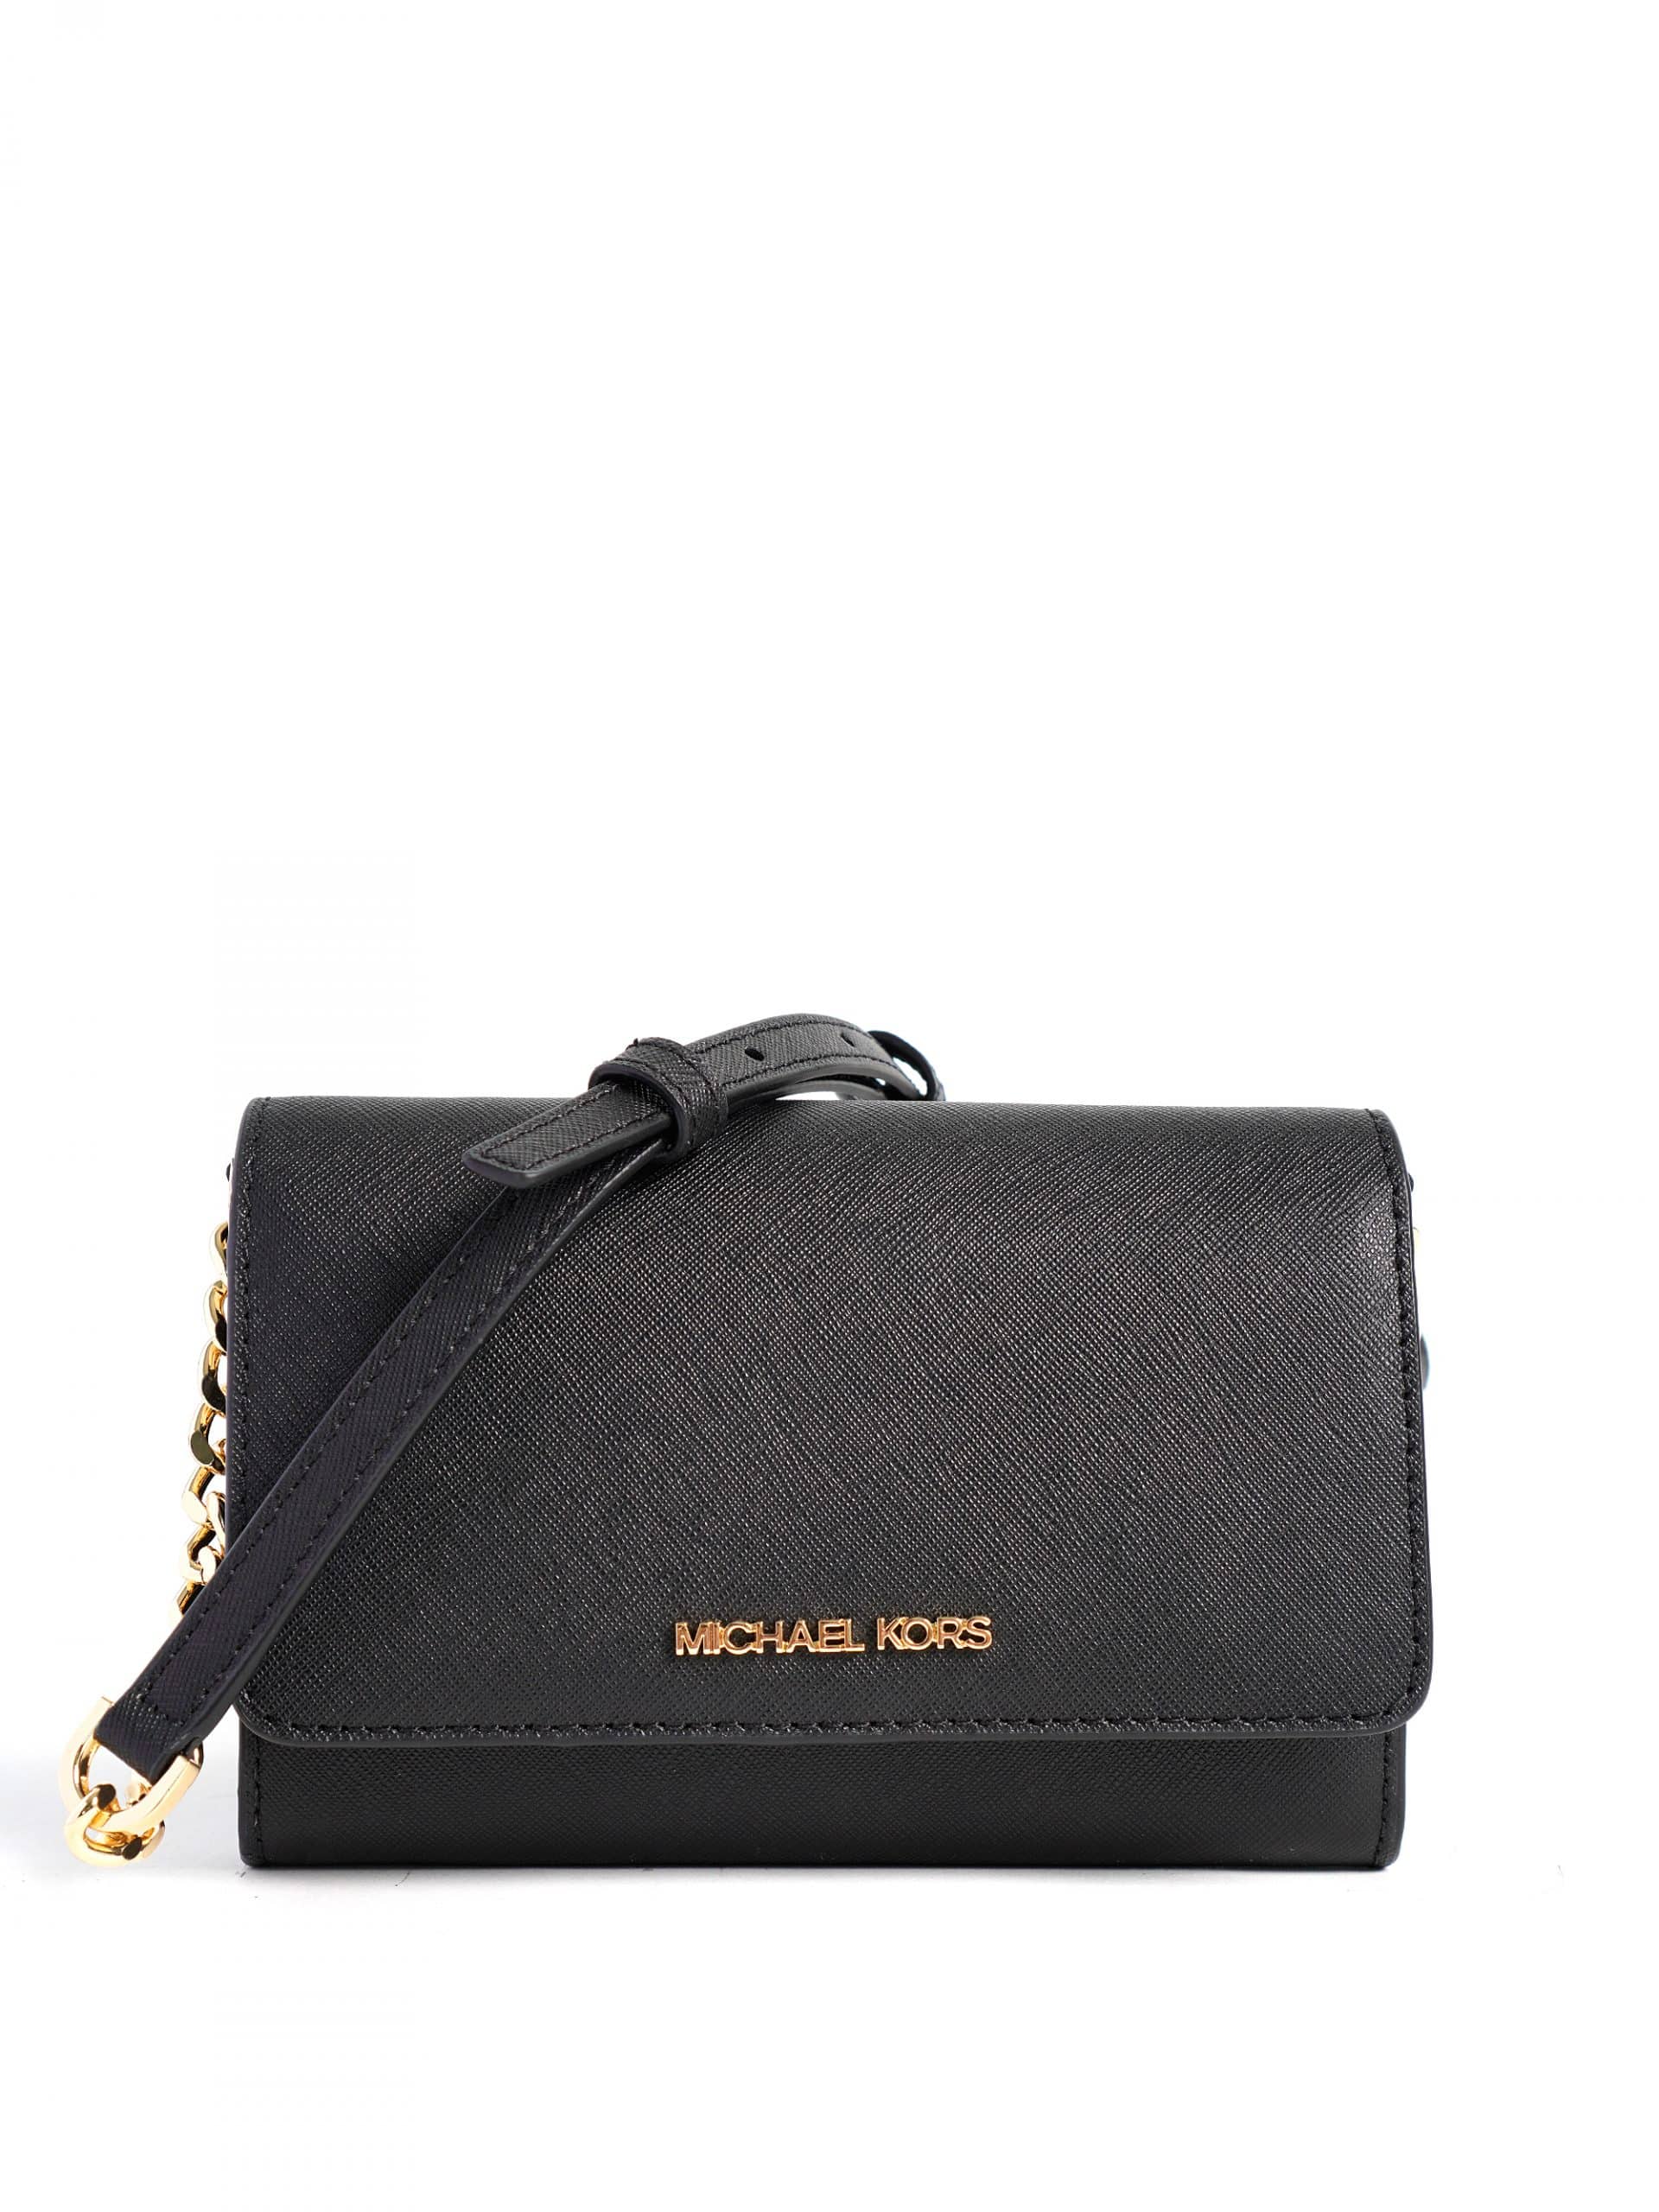 Michael Kors Women Medium Satchel Messenger Handbag Purse Crossbody -Black  Gold | eBay